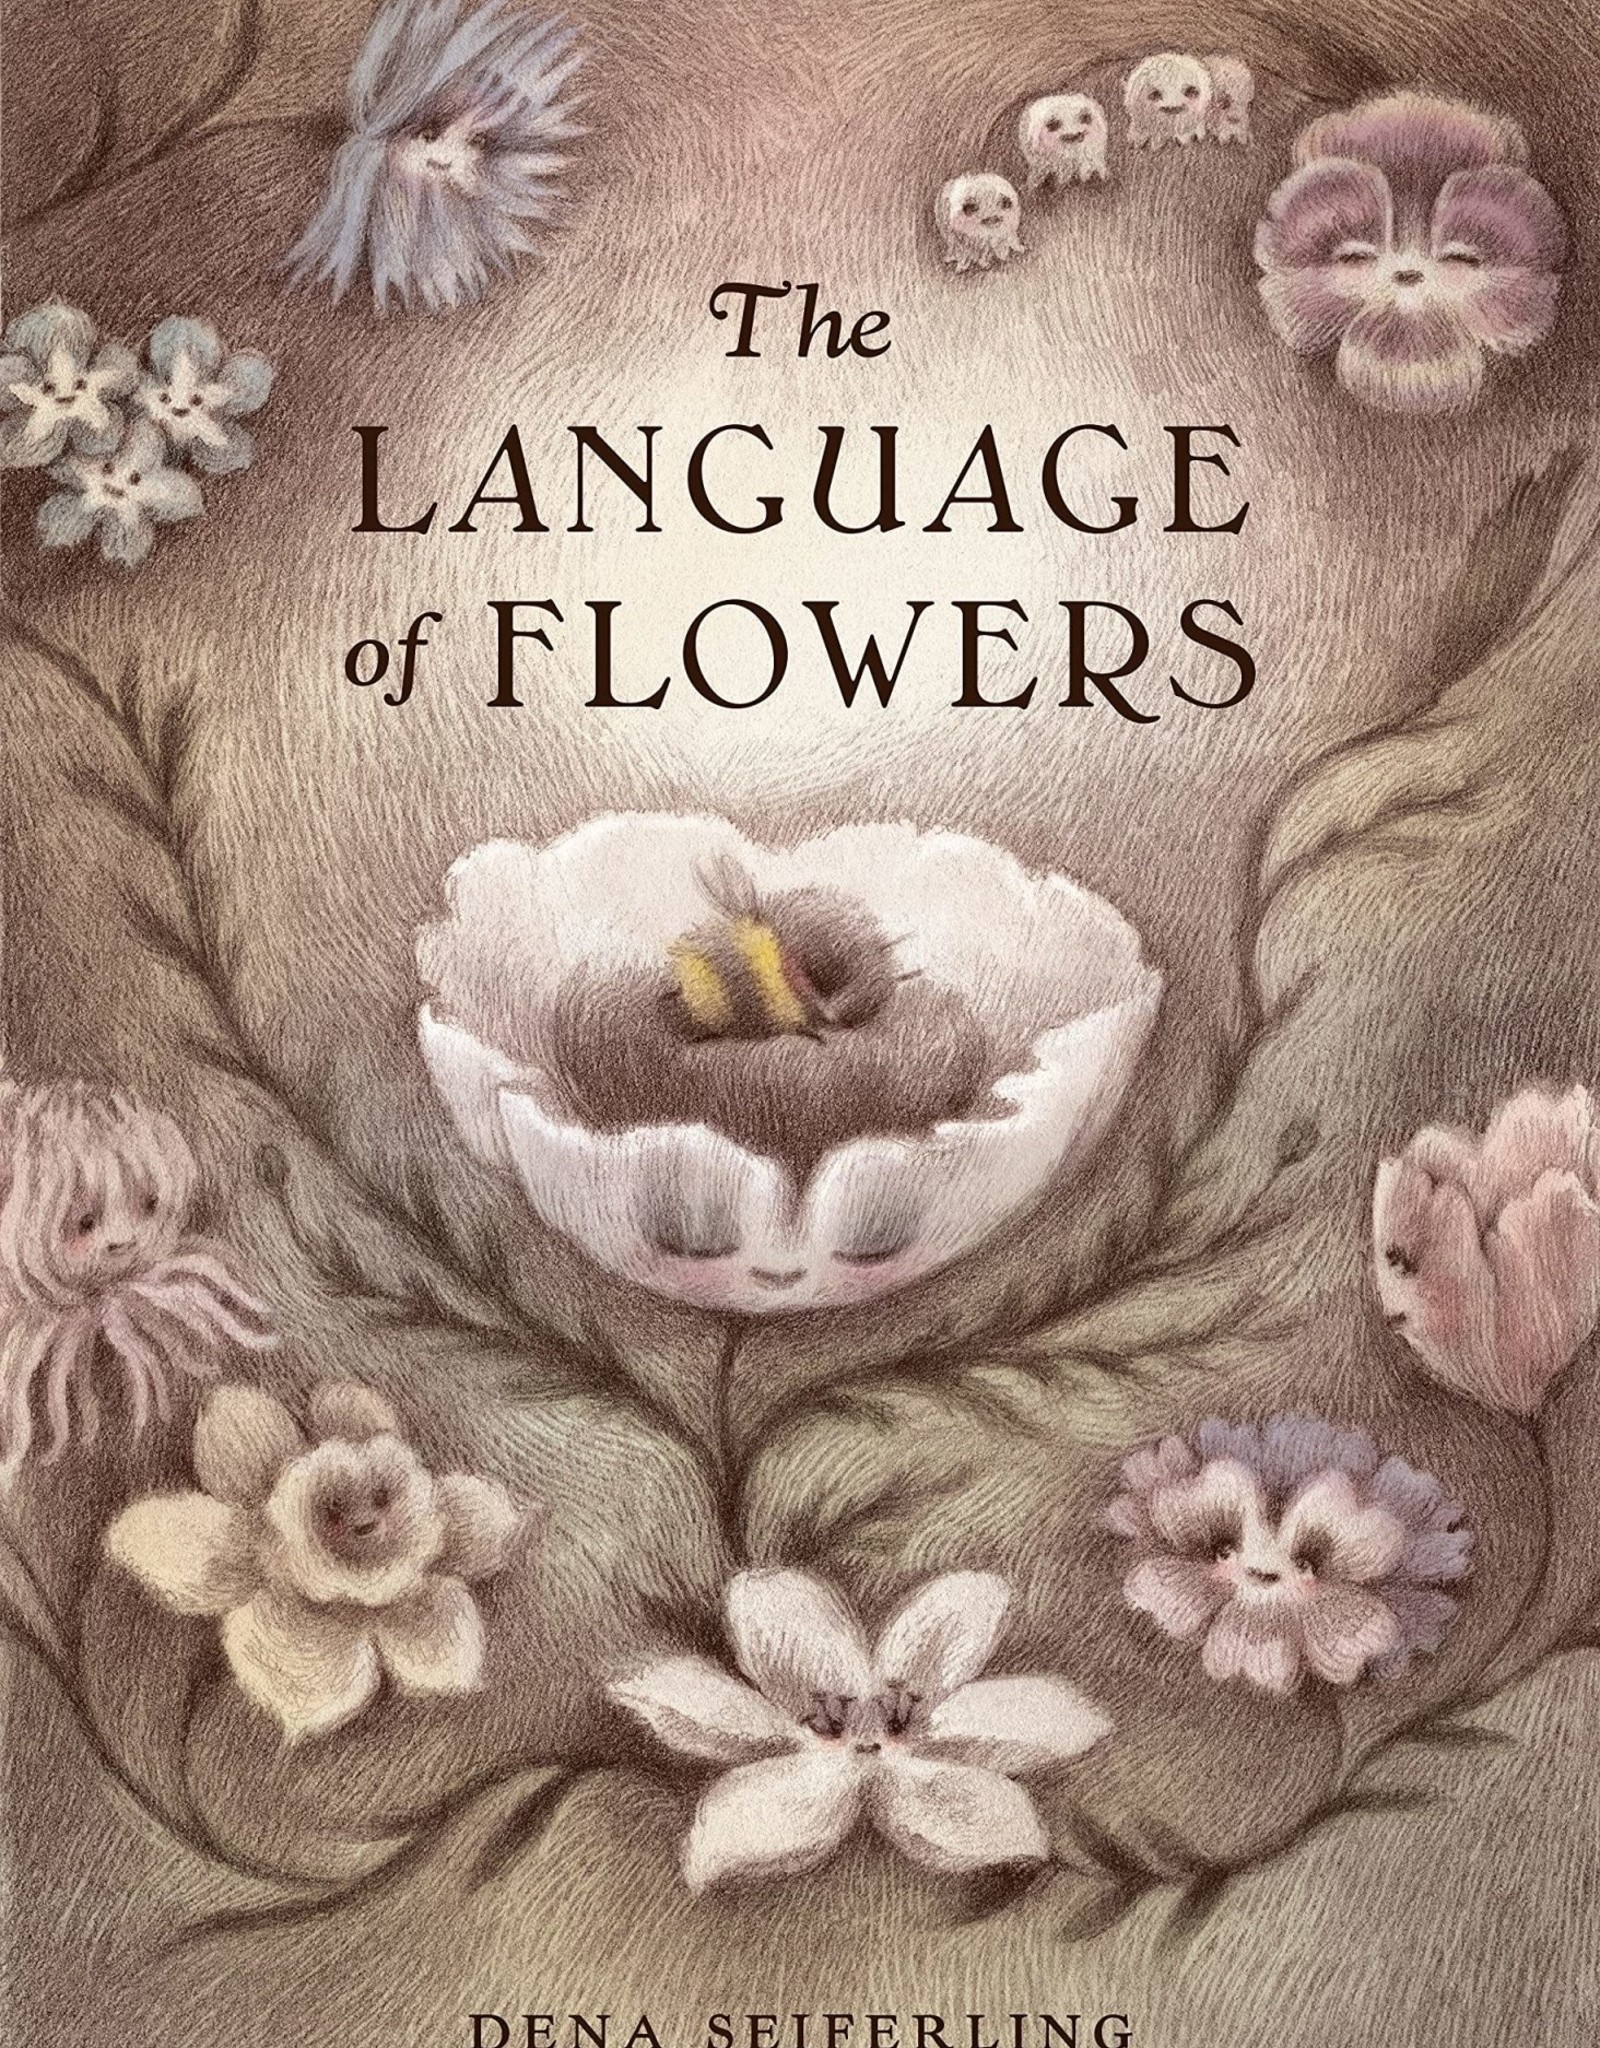 Random House/Penguin The Language of Flowers